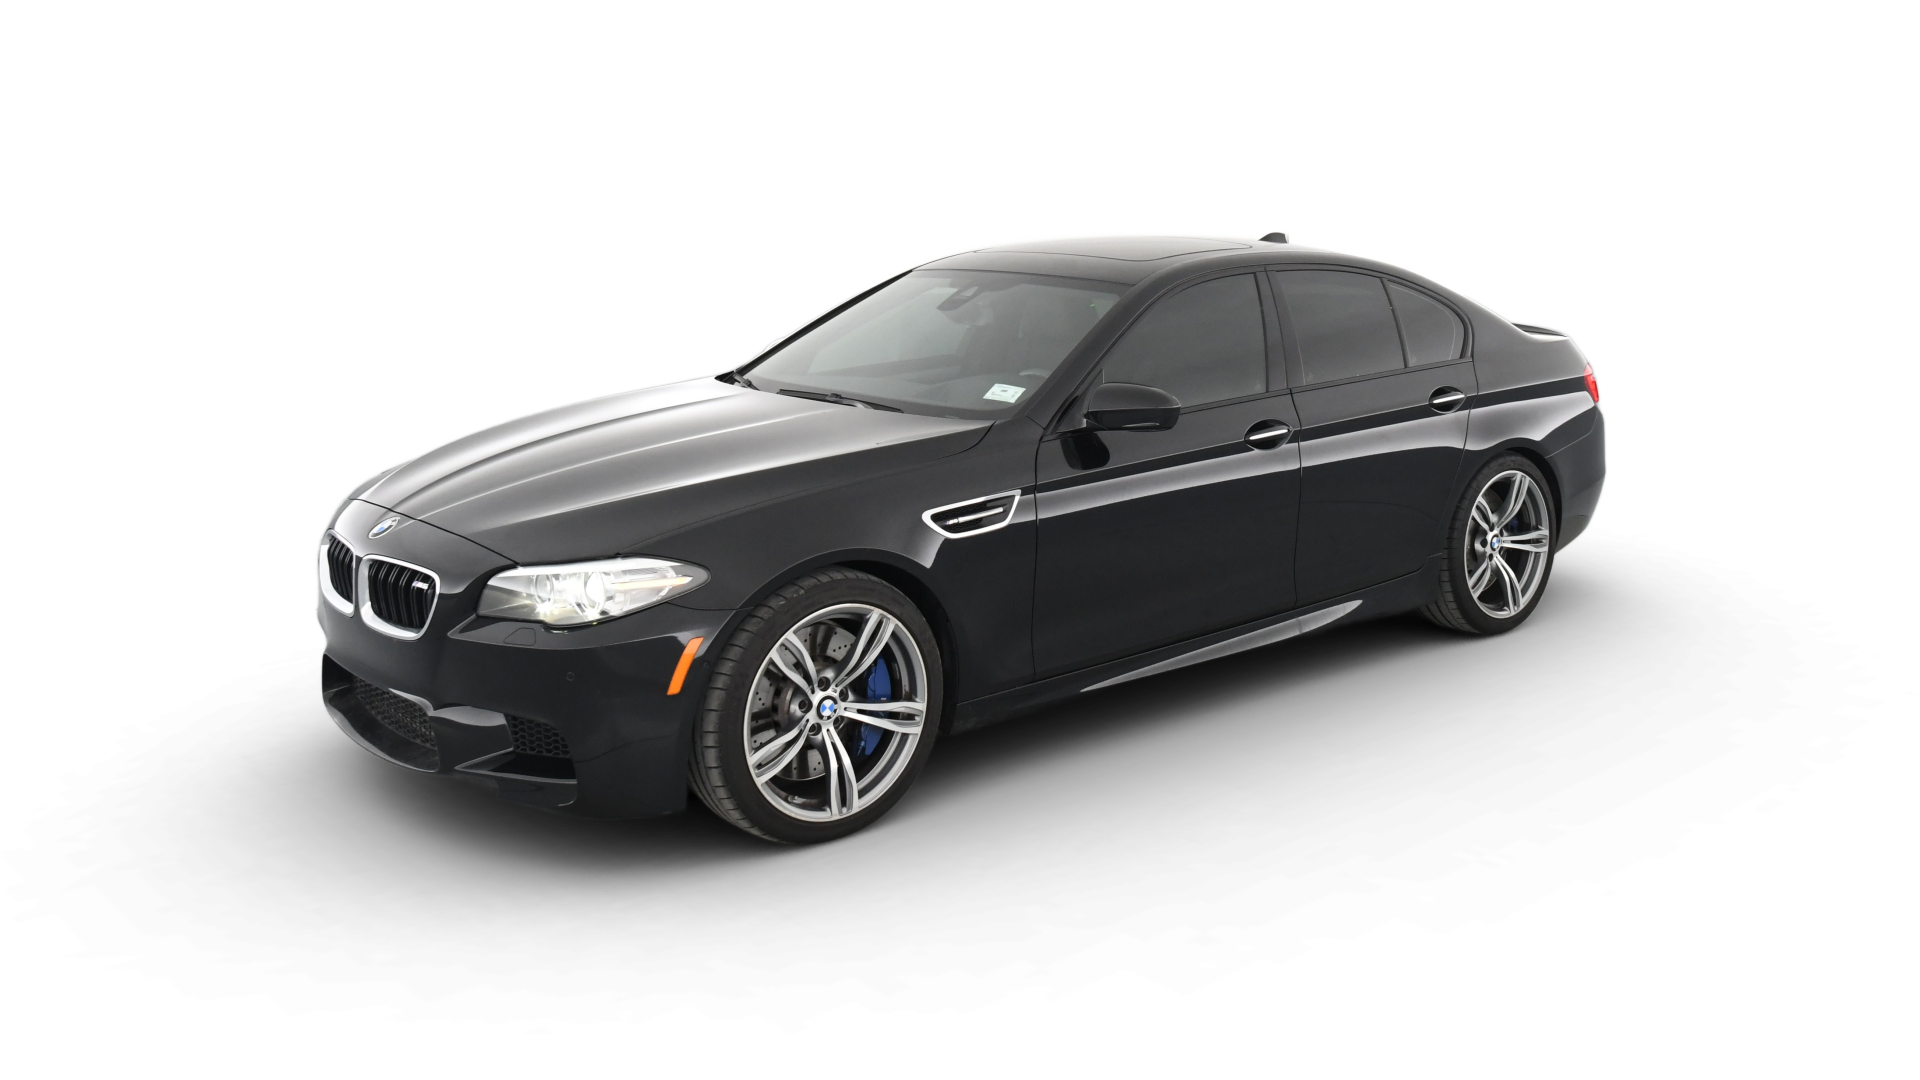 BMW M5 model image.